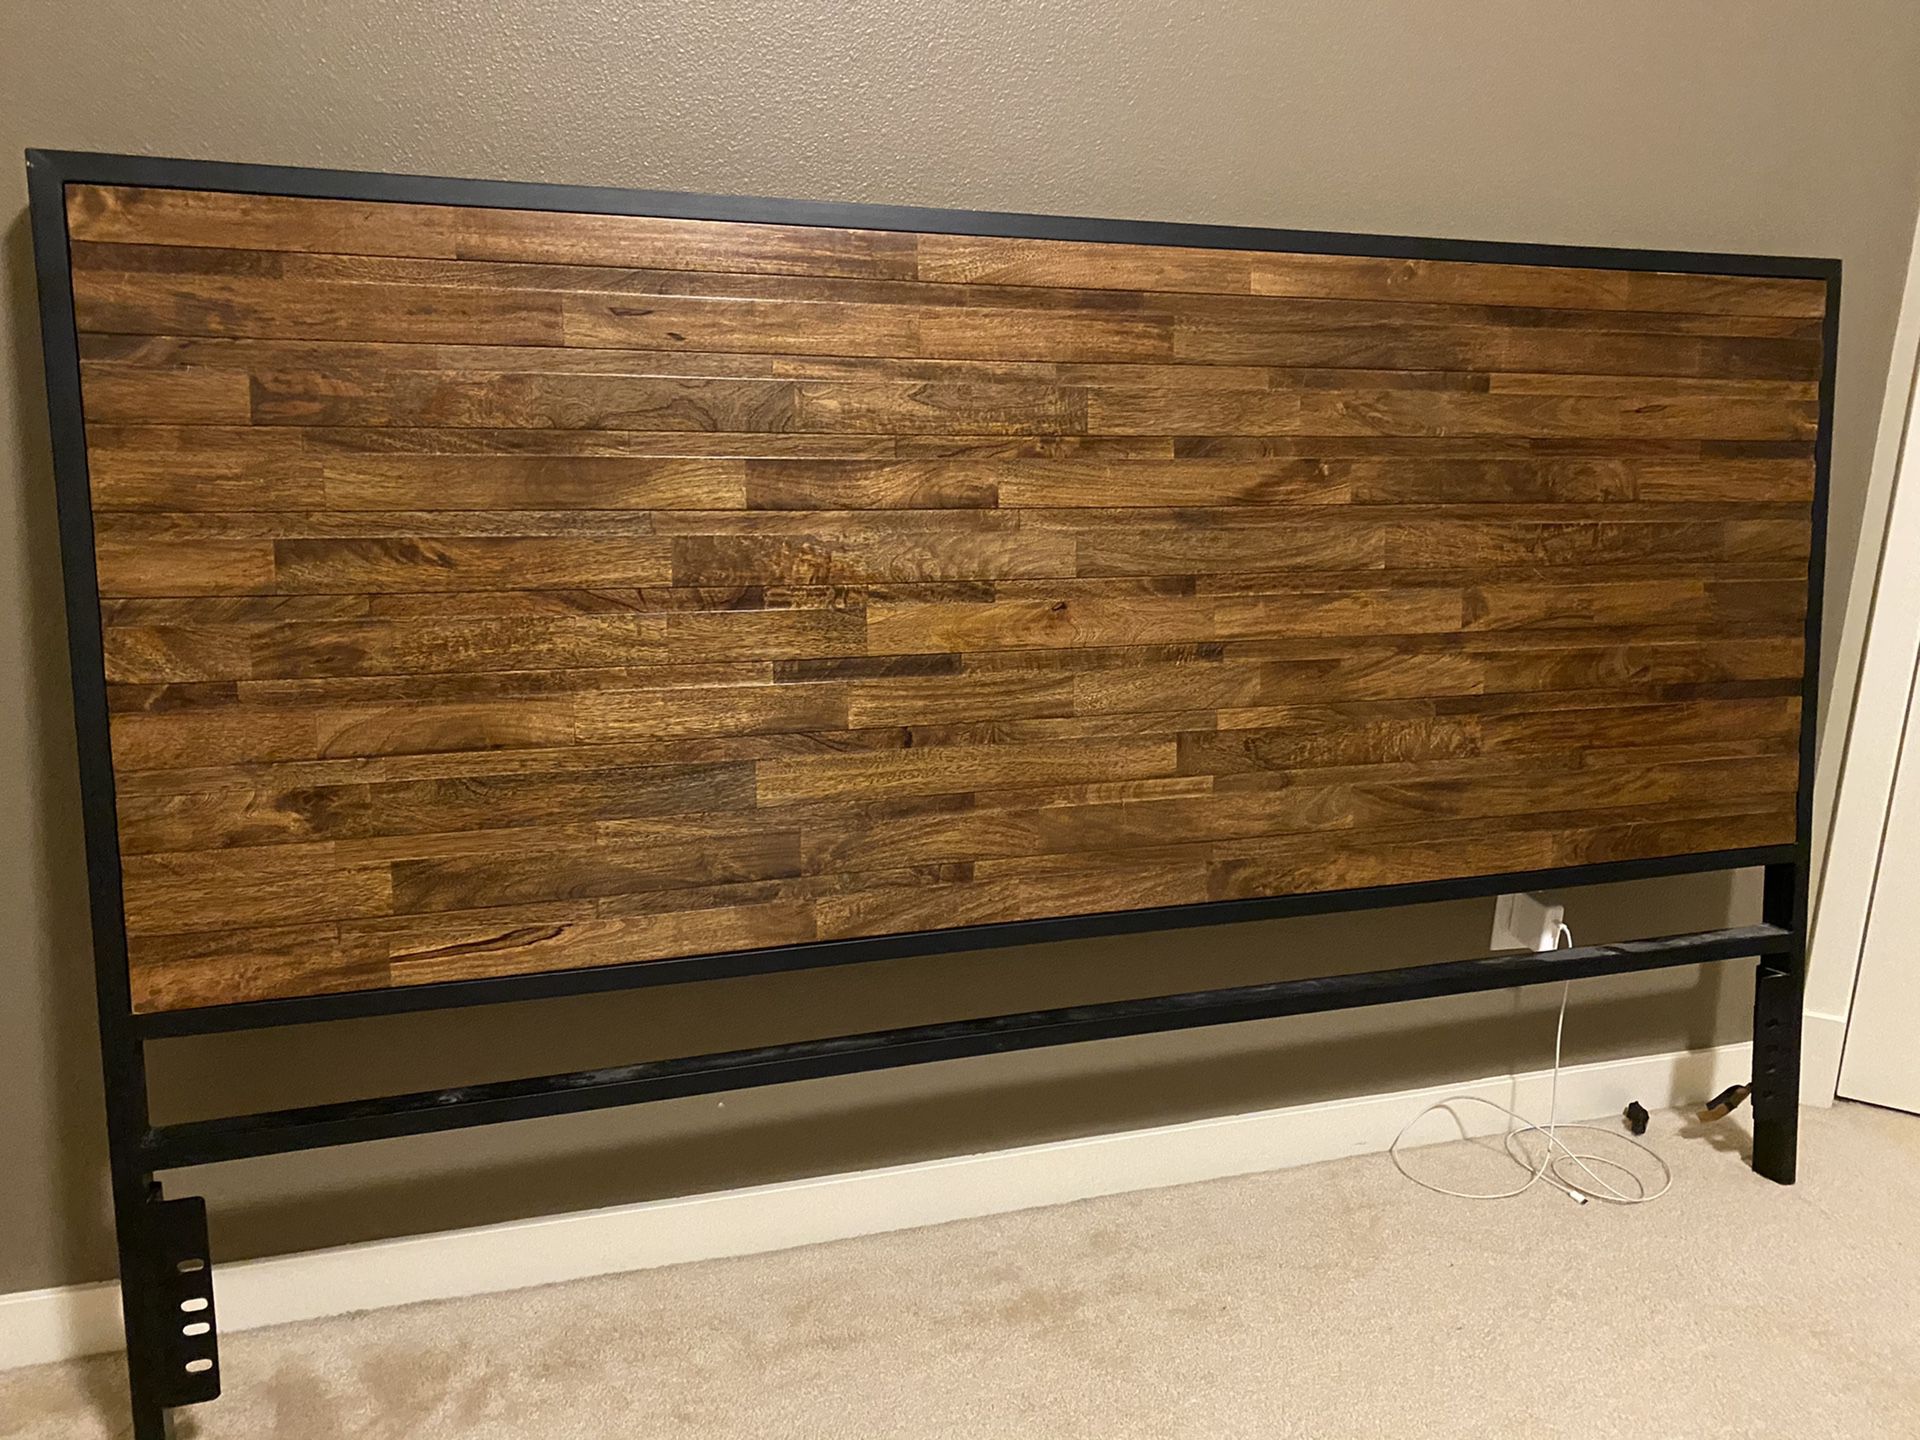 Solid wood king size headboard + Matel bed frame